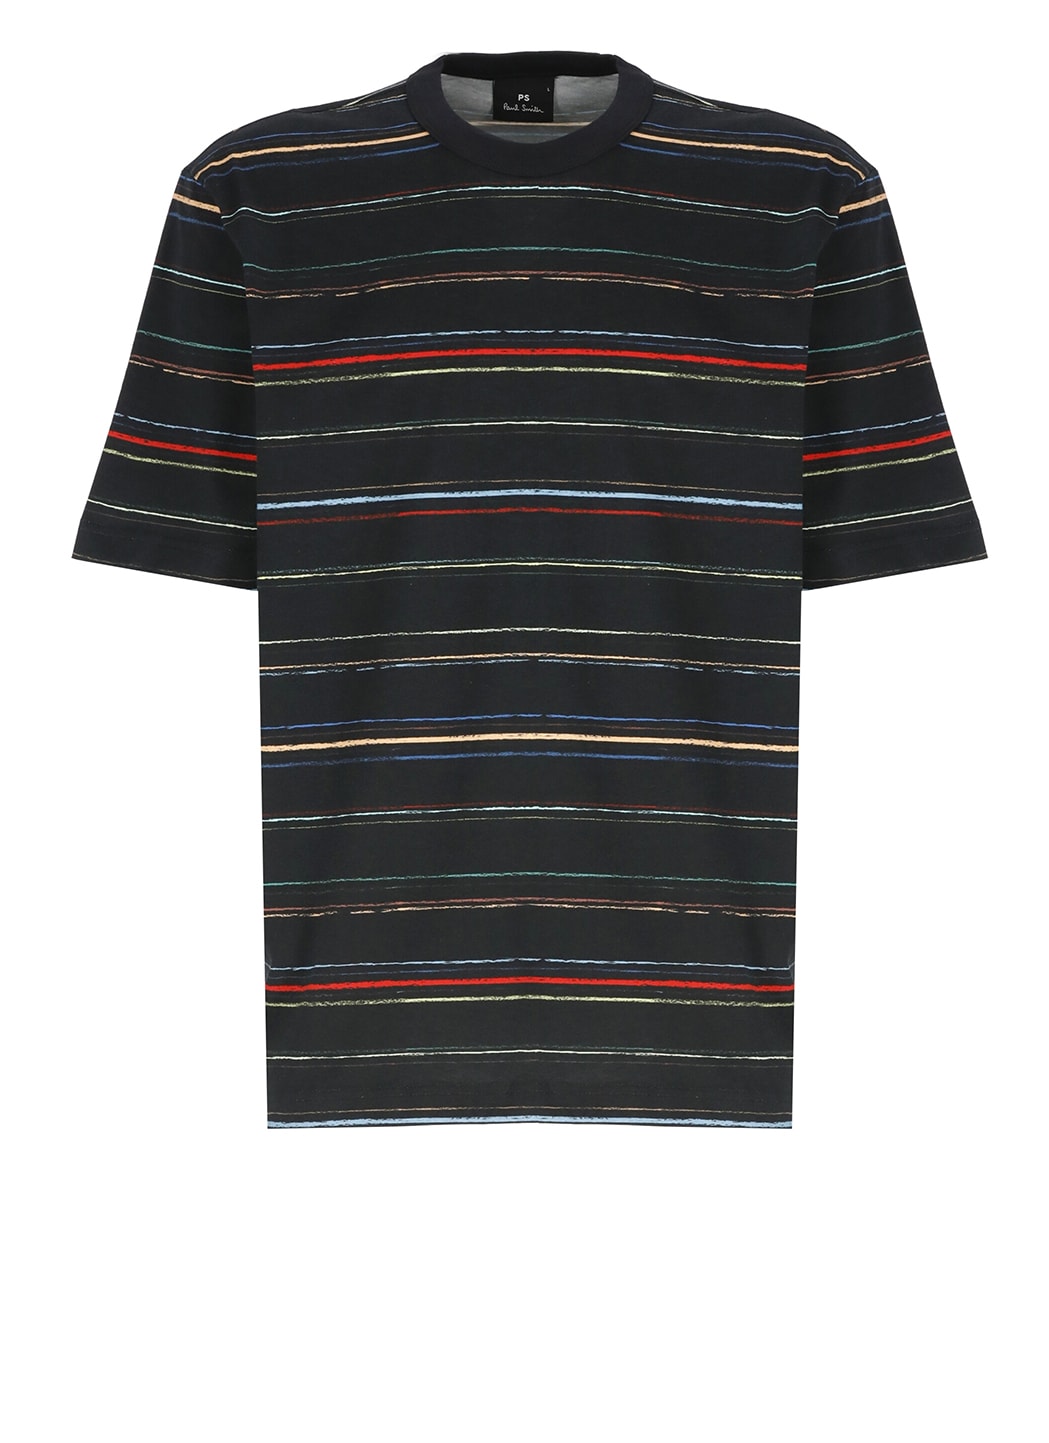 Paul Smith Horizontal Striped T-shirt In Black | ModeSens